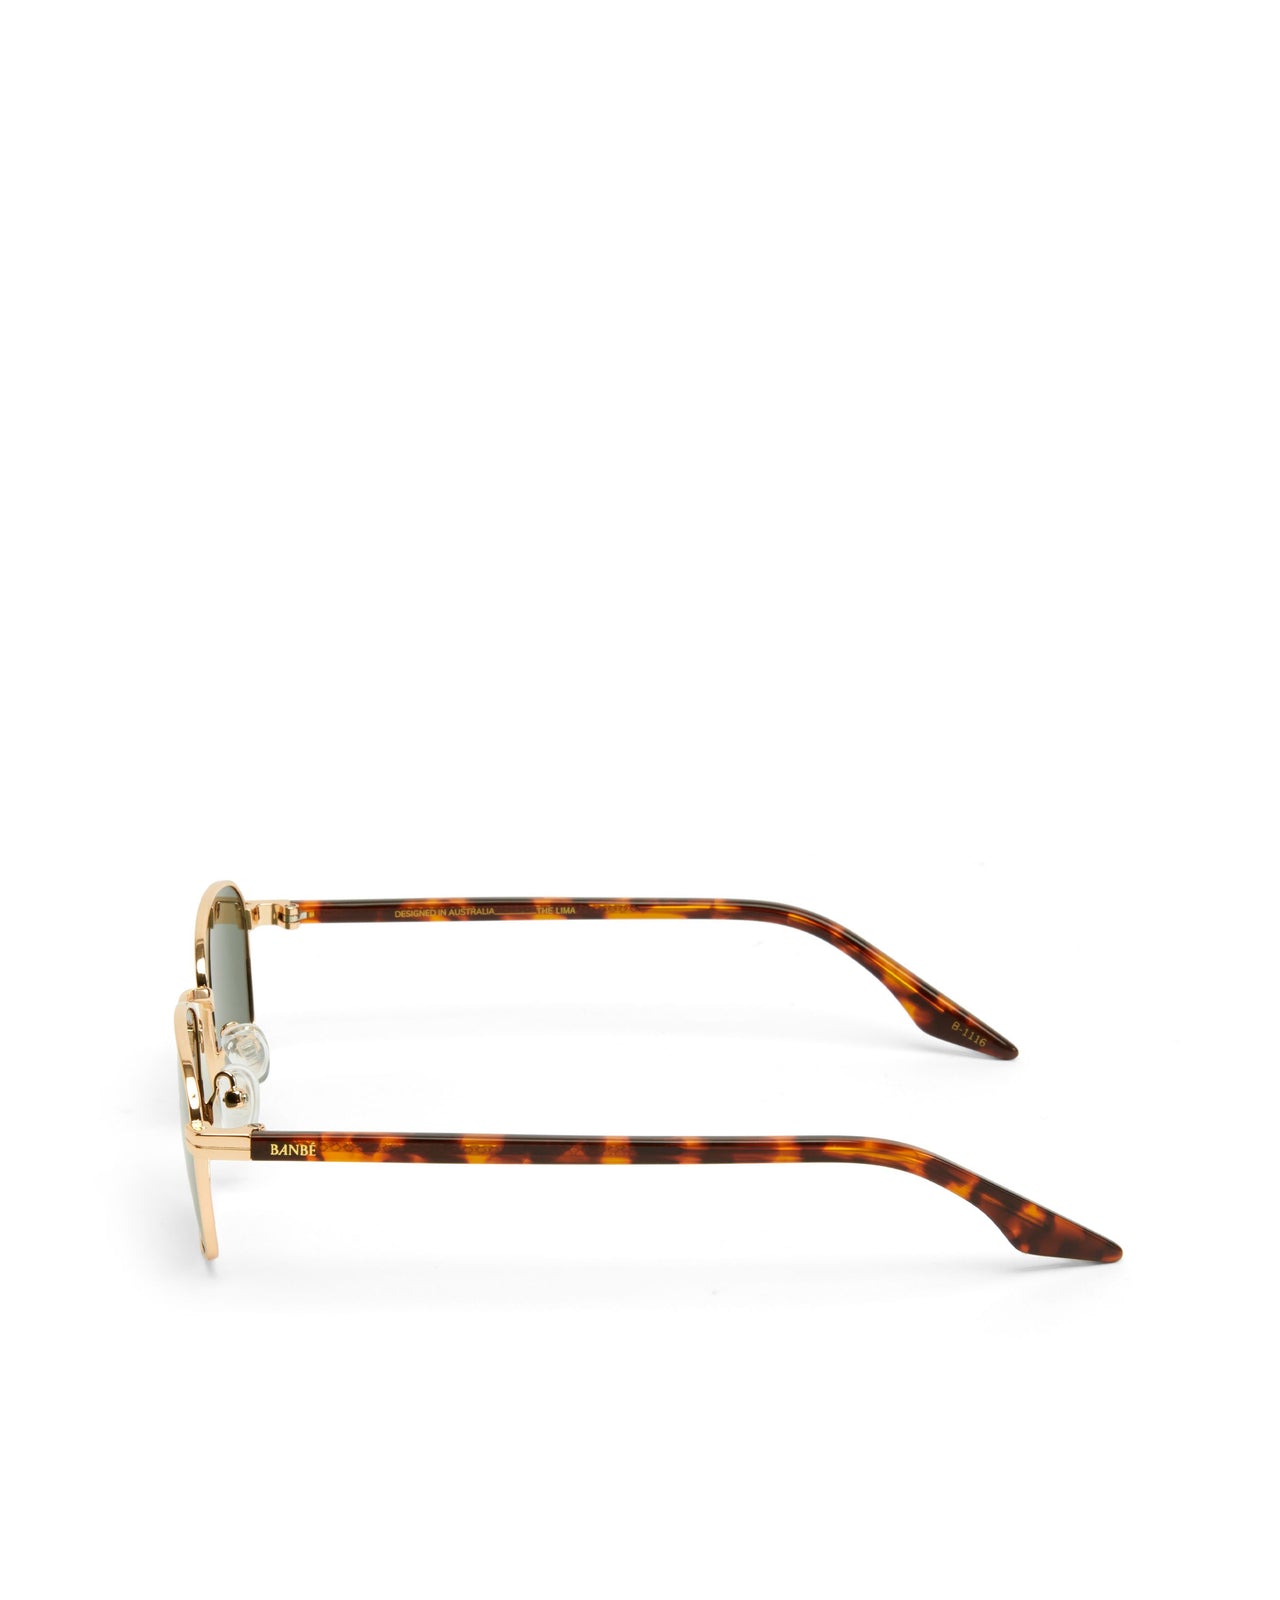 The Lima Sunglasses, Sunglass Acc by Banbe | LIT Boutique